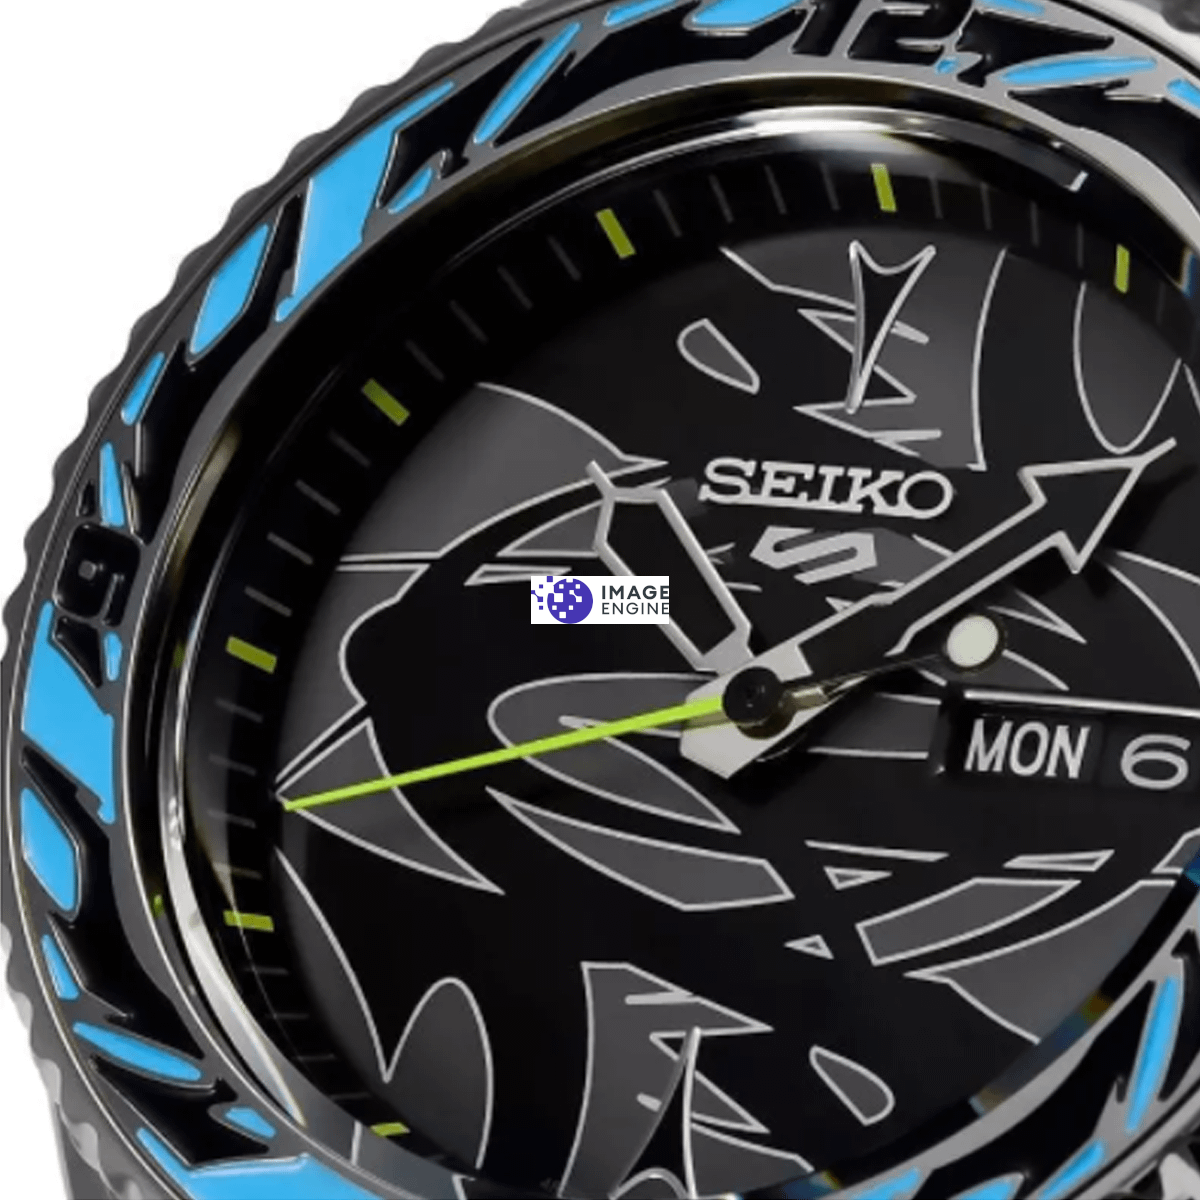 5 Sports GUCCIMAZE Limited Edition Watch - SRPG65K1